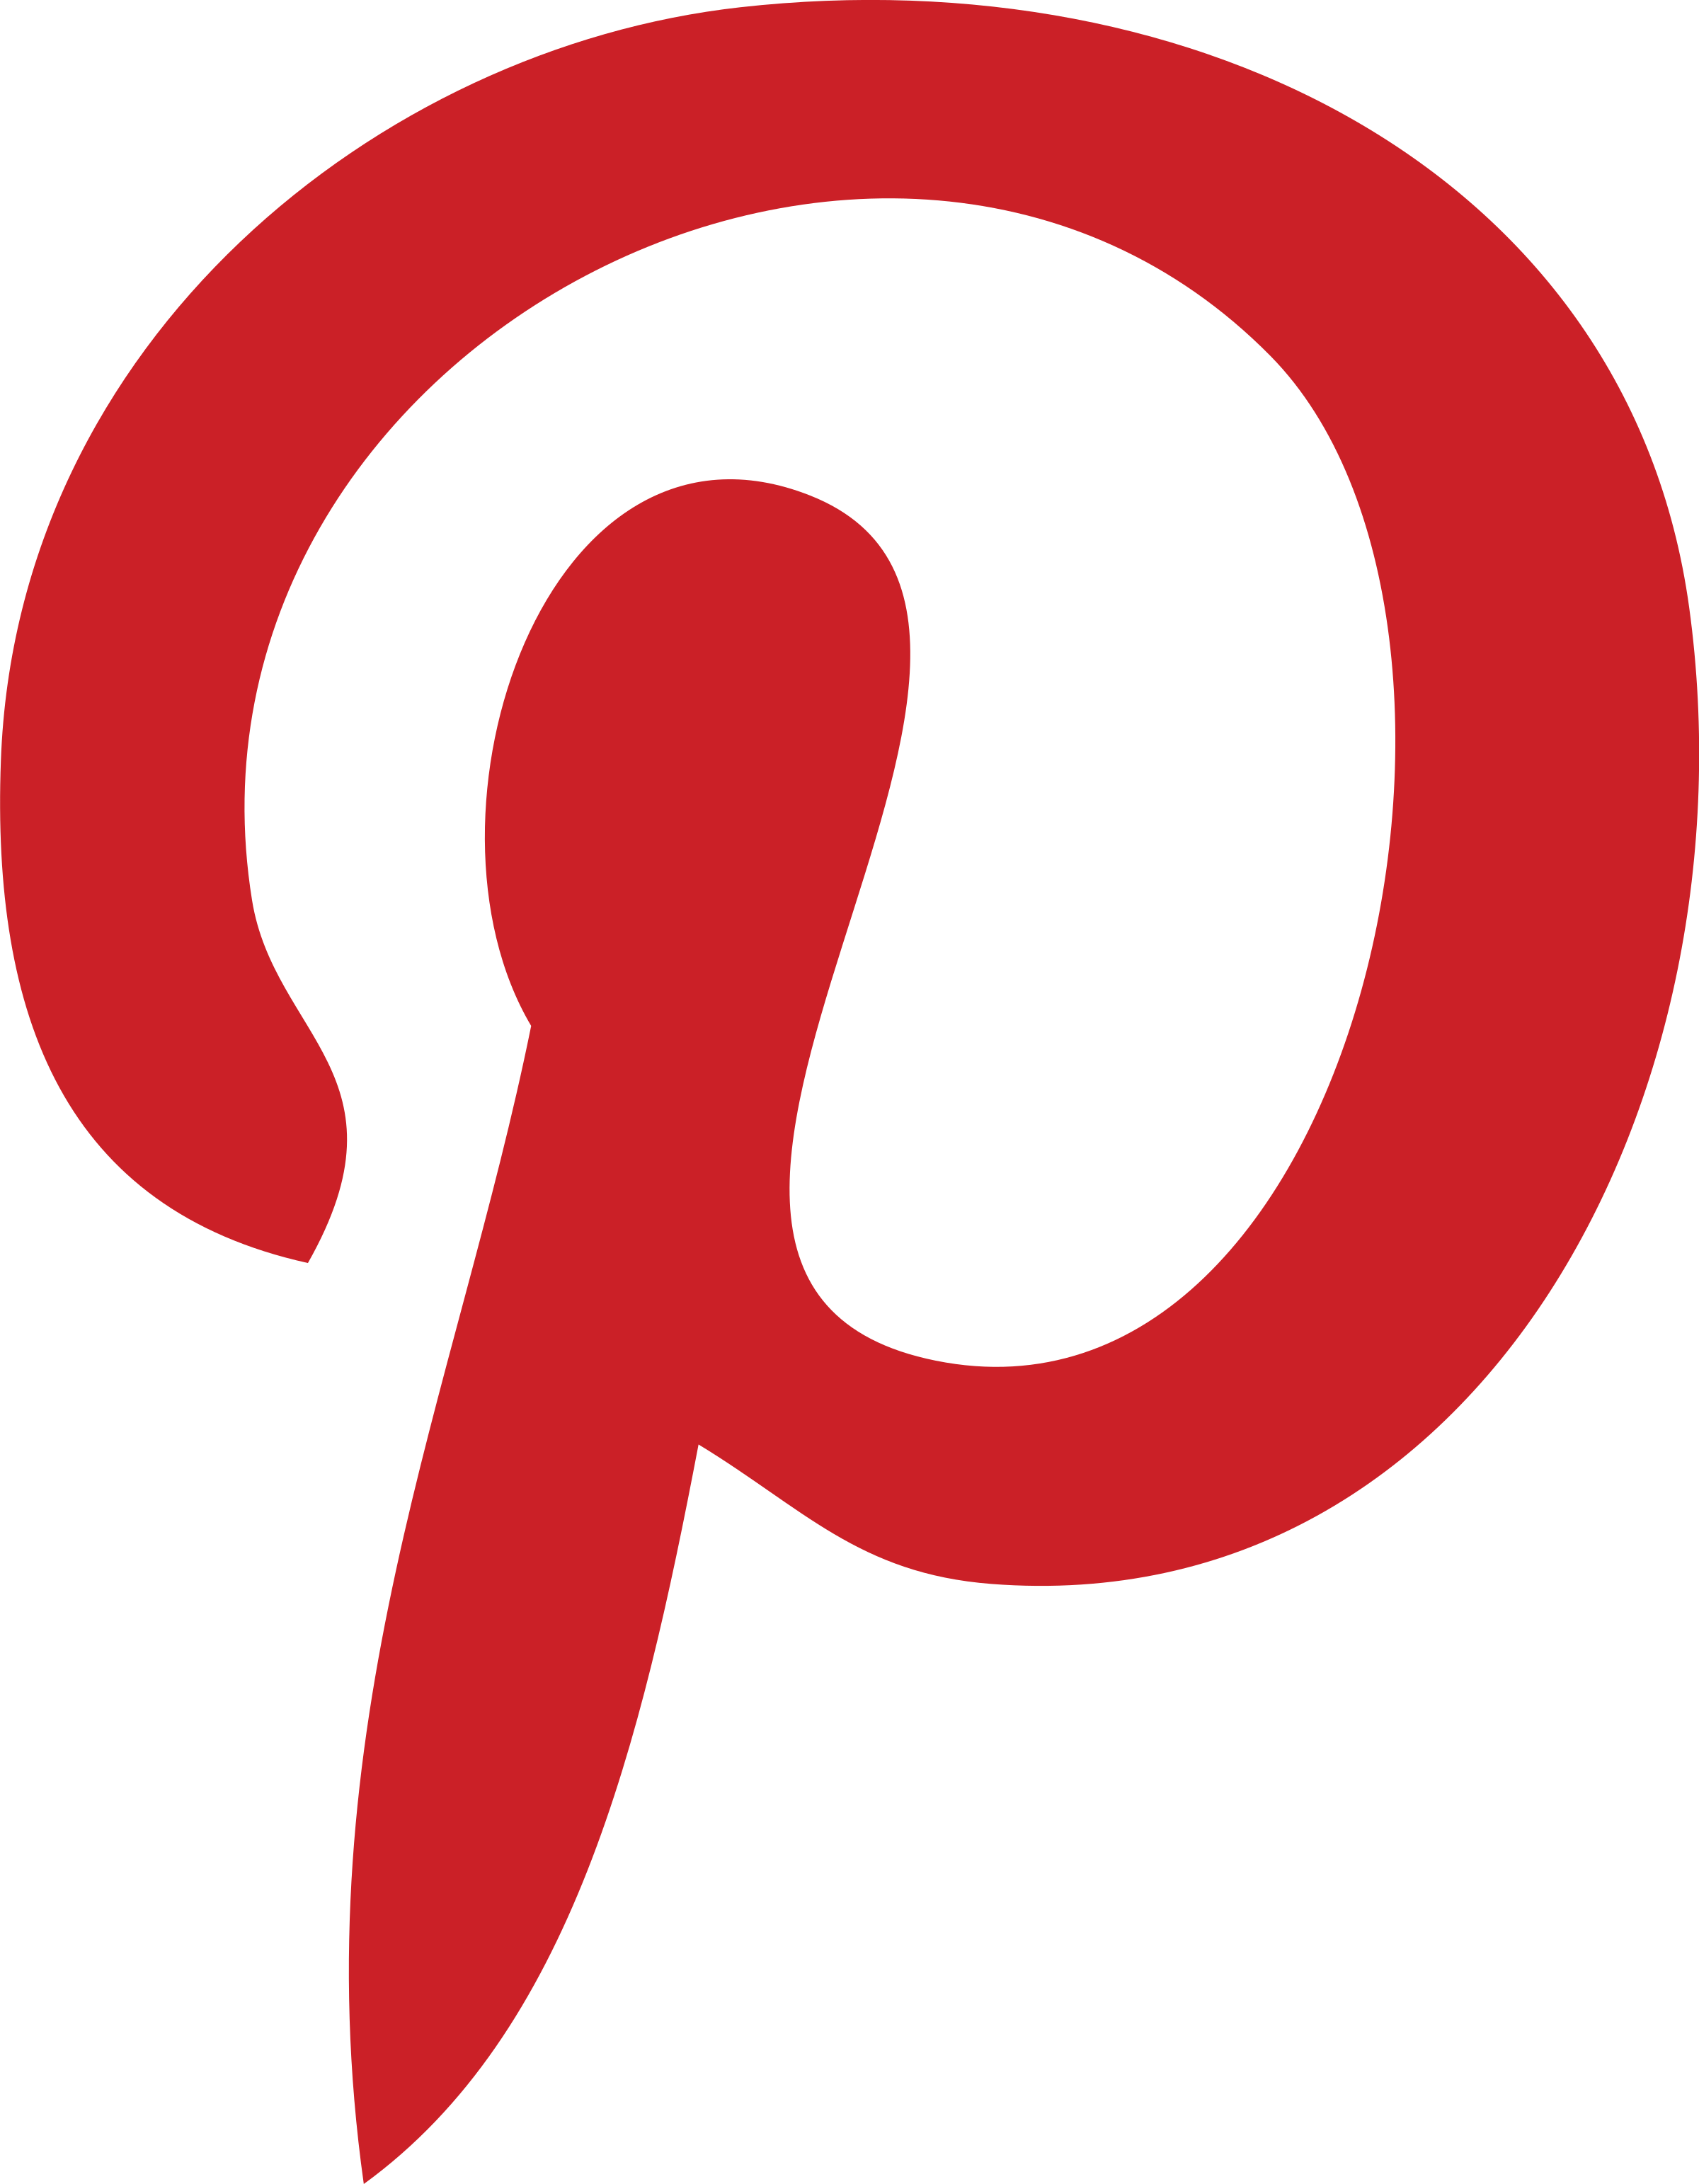 Pinterset Logo - Pinterest 2 Logo PNG Transparent & SVG Vector - Freebie Supply